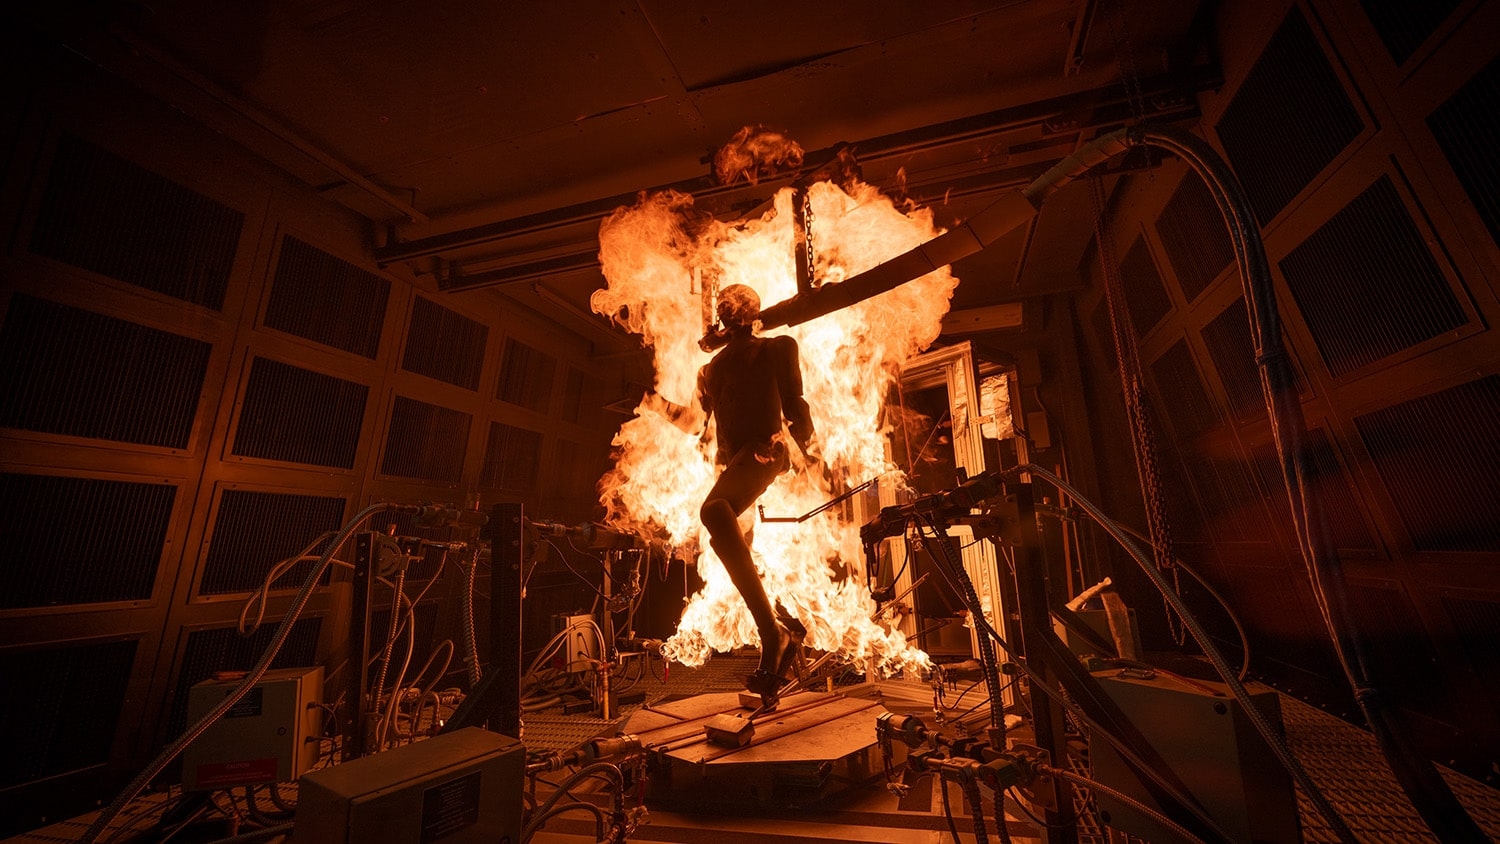 Inside a testing lab, a human-sized manikin moves inside flames.